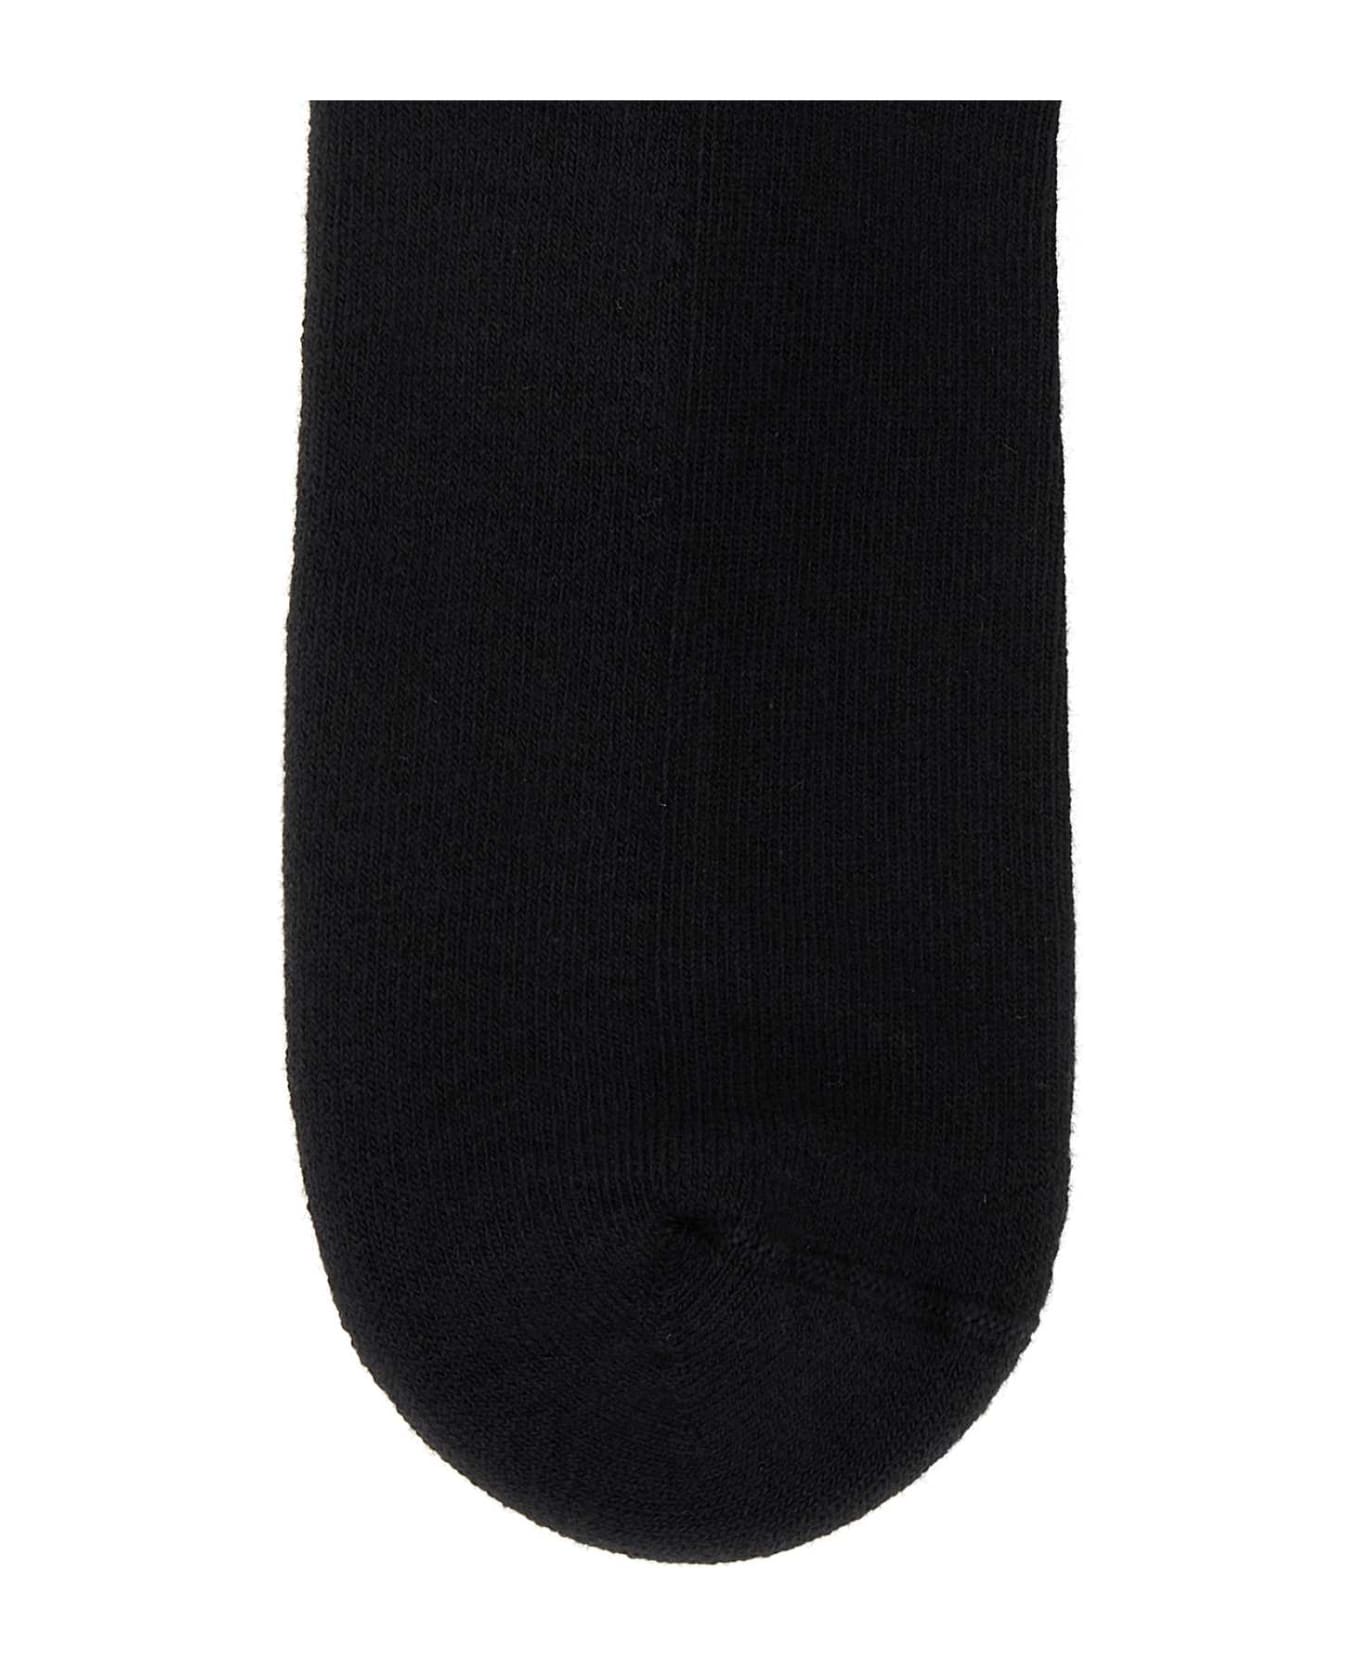 Carhartt Black Stretch Cotton Blend Chase Socks - WHT 靴下